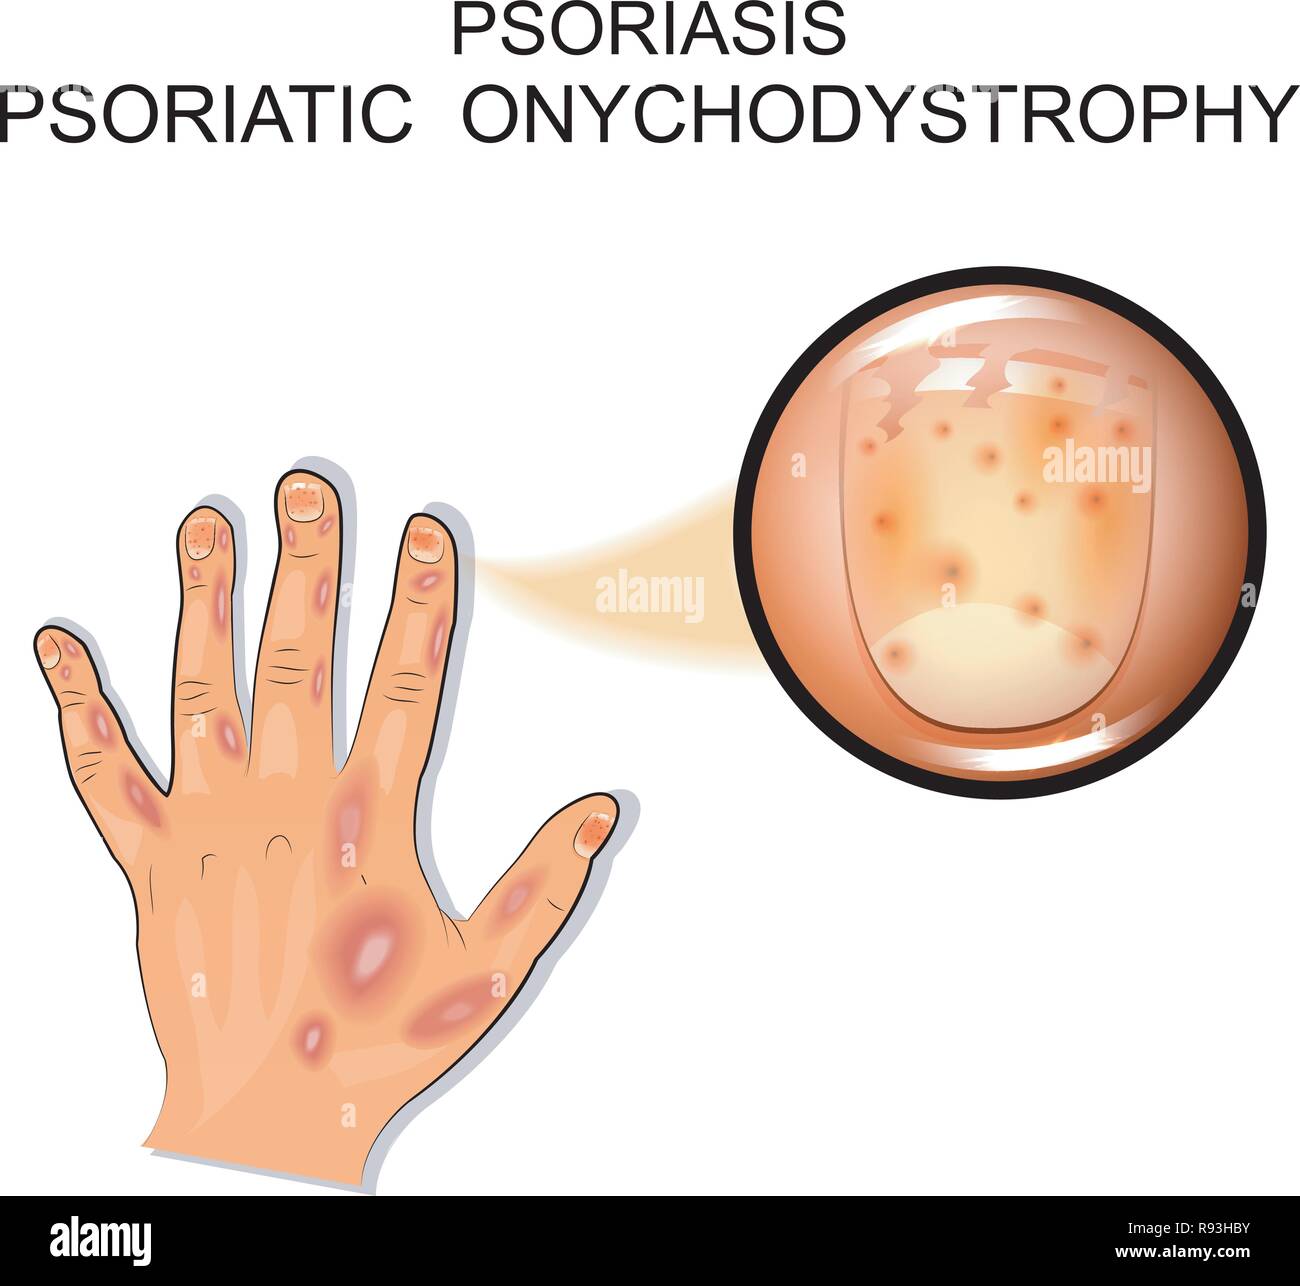 vector illustration of a psoriatic onychodystrophy. psoriasis. Stock Vector